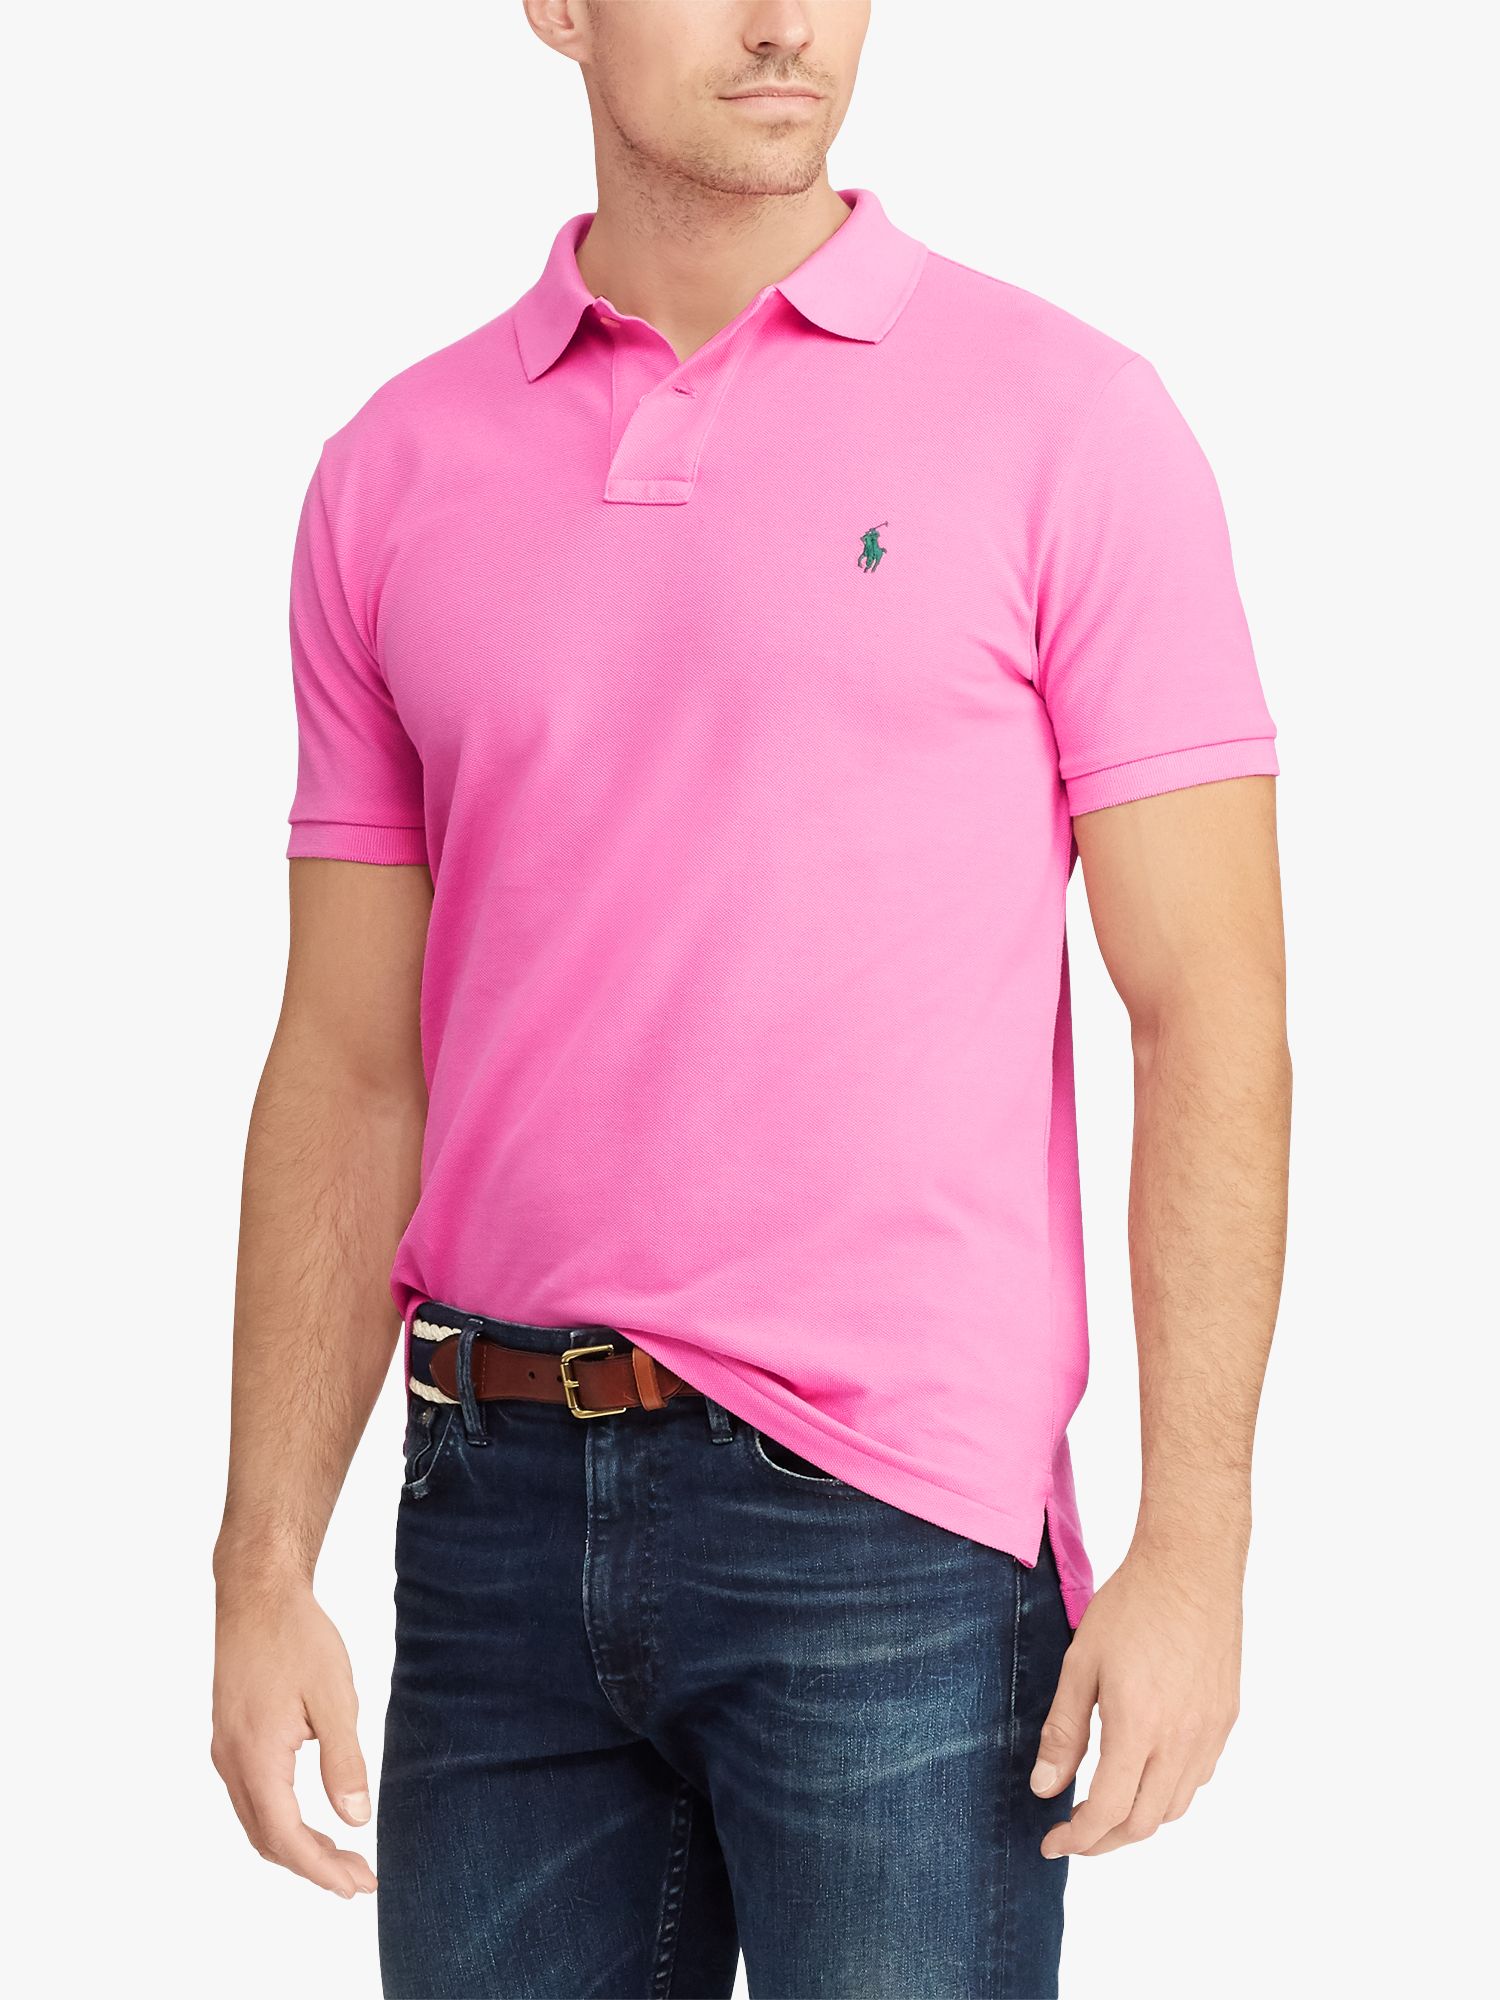 Polo Ralph Lauren Polo Shirt, Maui Pink 